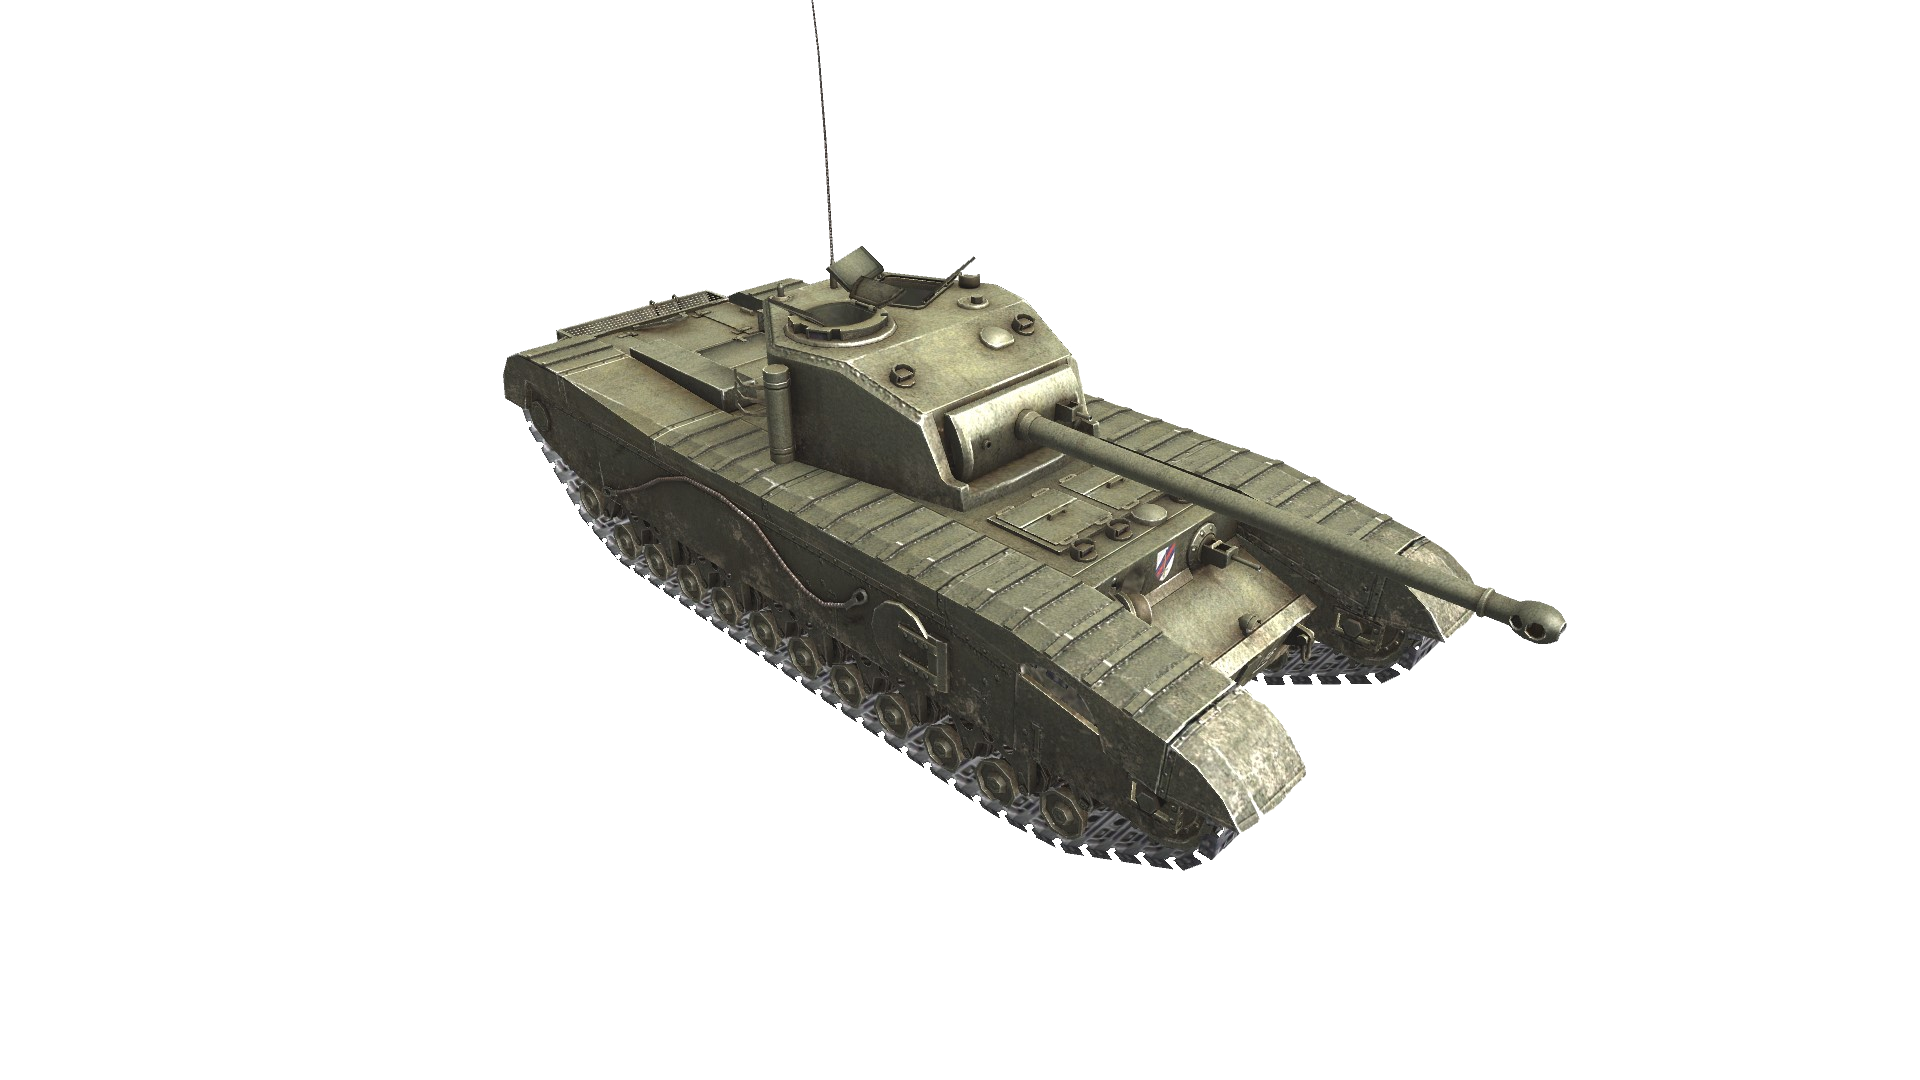 Black Prince tank - Wikimedia Commons